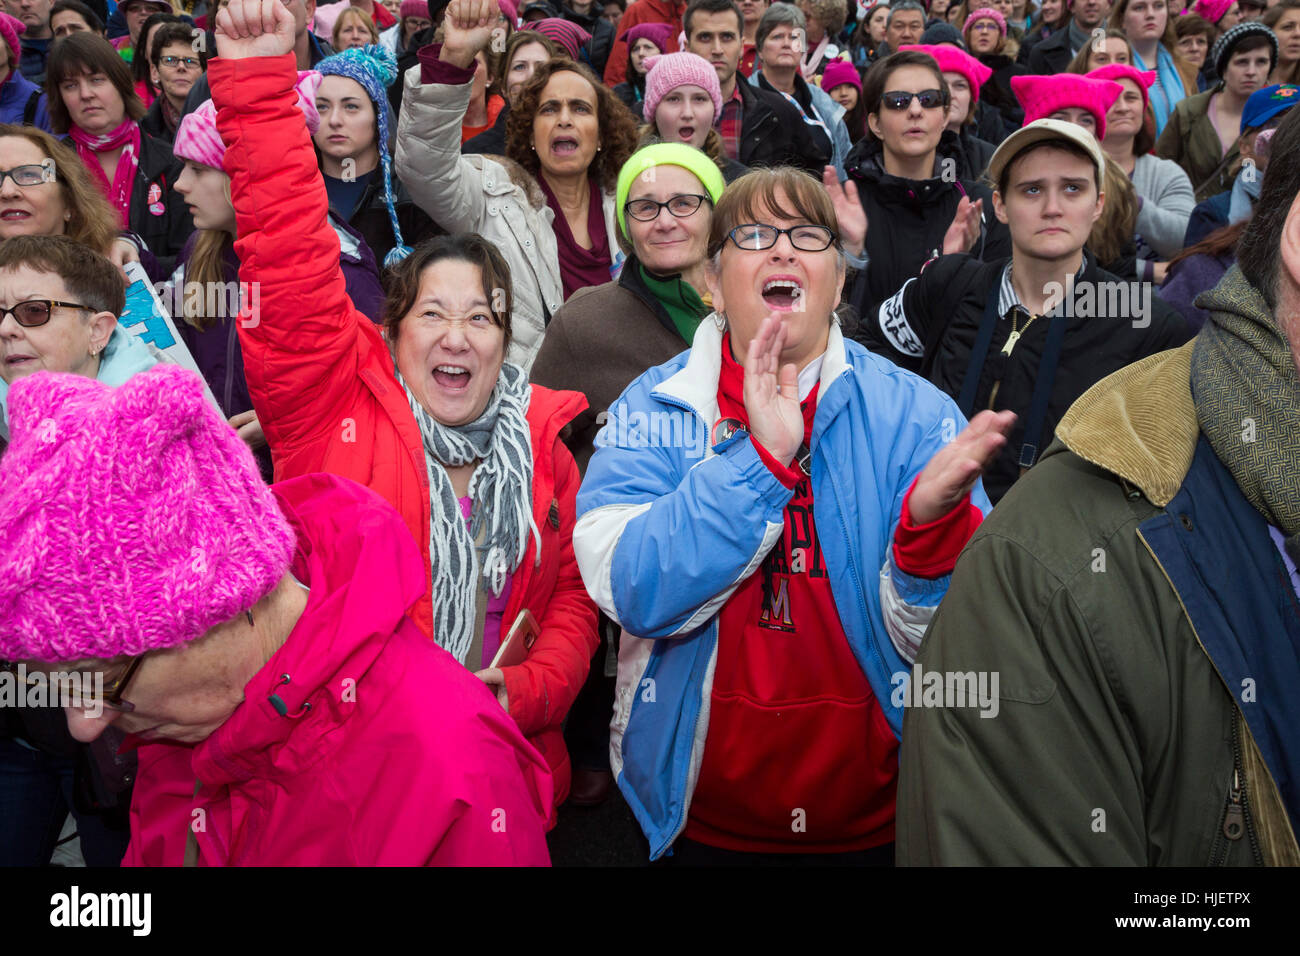 Washington, DC - The Women's March on Washington protested the inauguration of President Donald Trump. Stock Photo